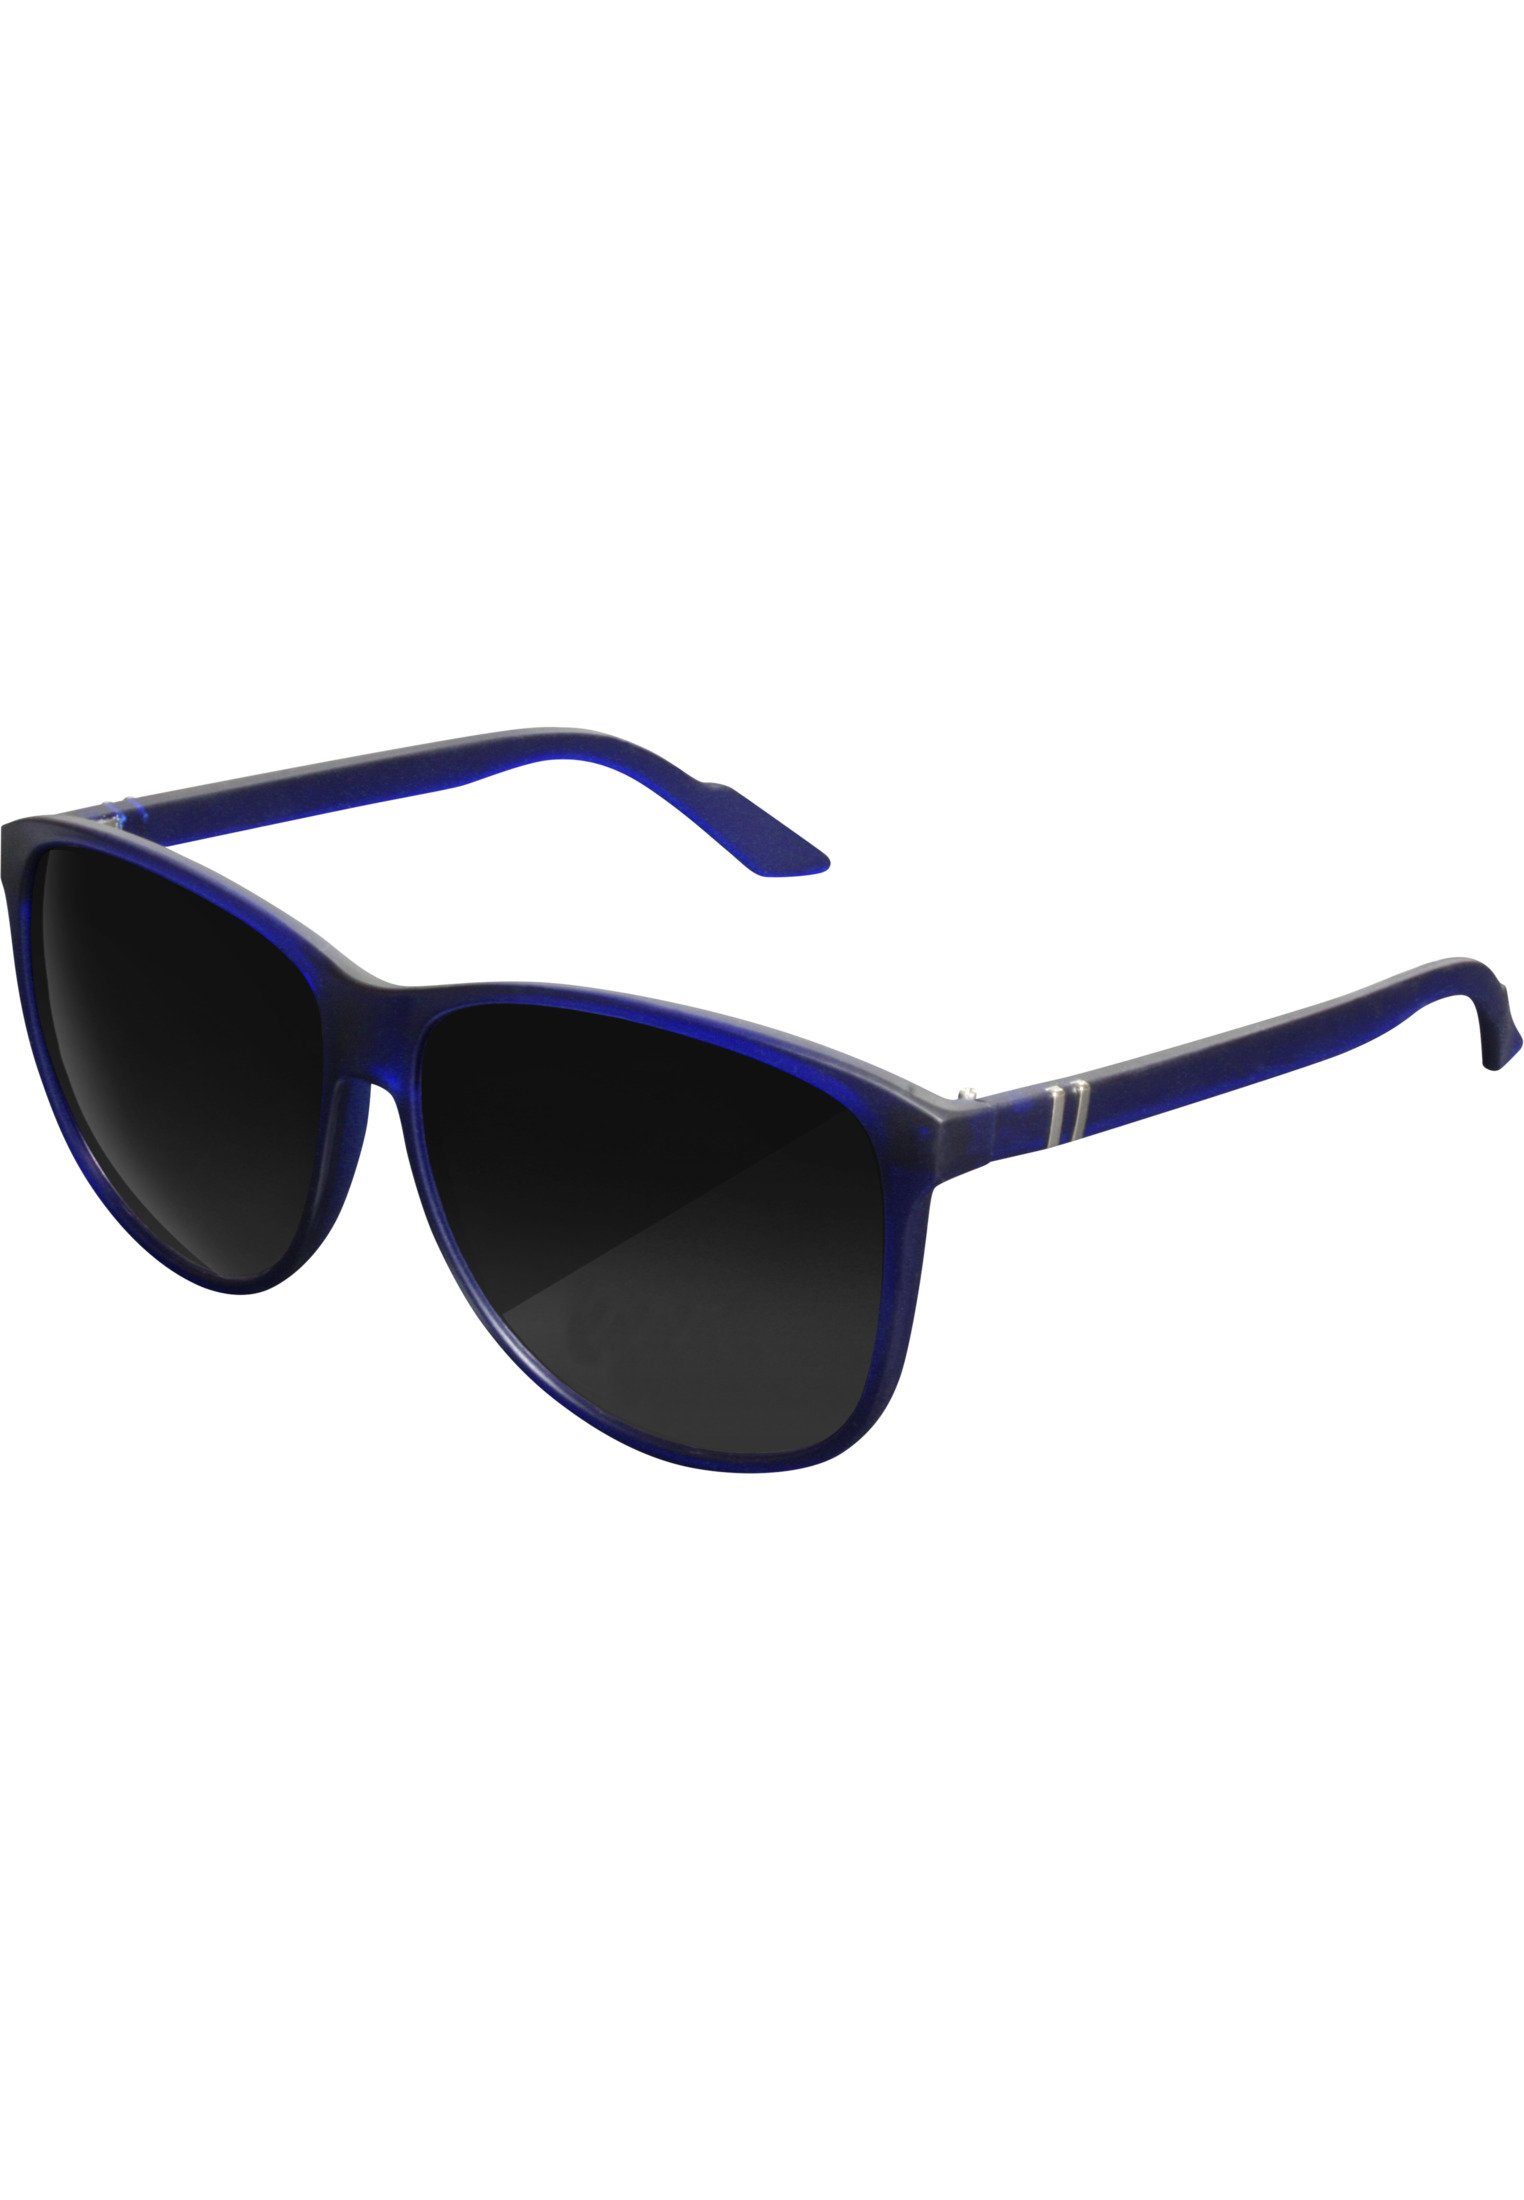 MSTRDS Sonnenbrille Accessoires Sunglasses Chirwa royal